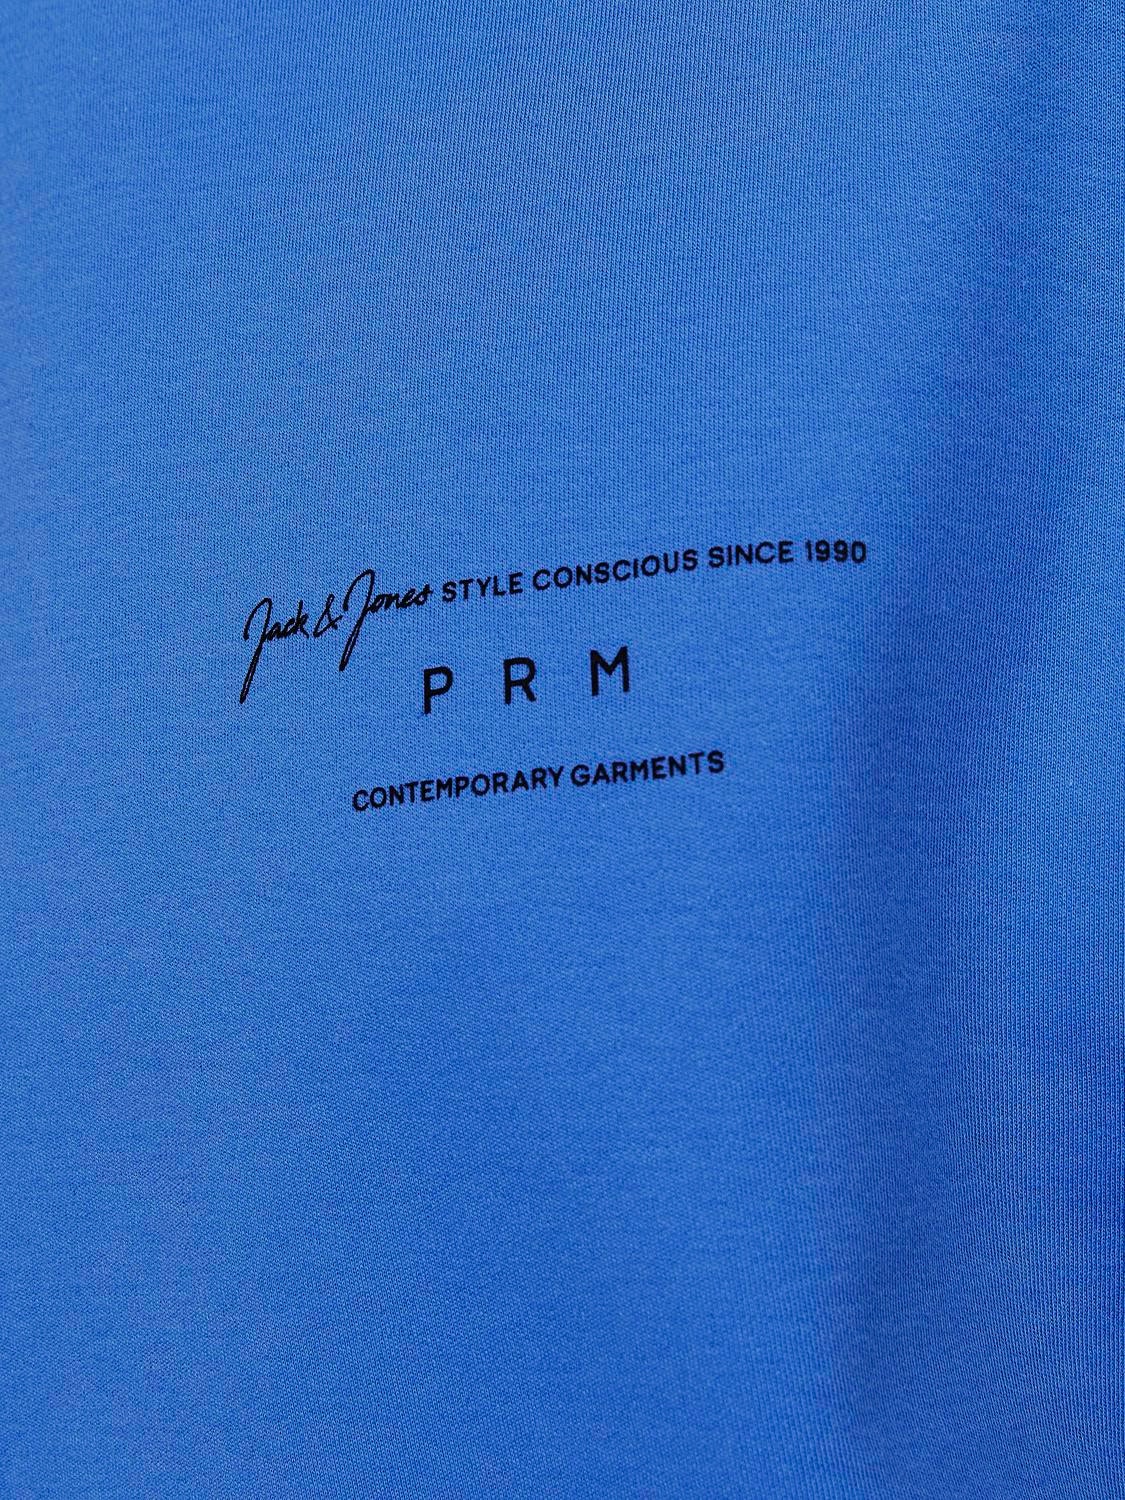 Jack & Jones T-shirt Estampar Decote Redondo -Palace Blue - 12245400